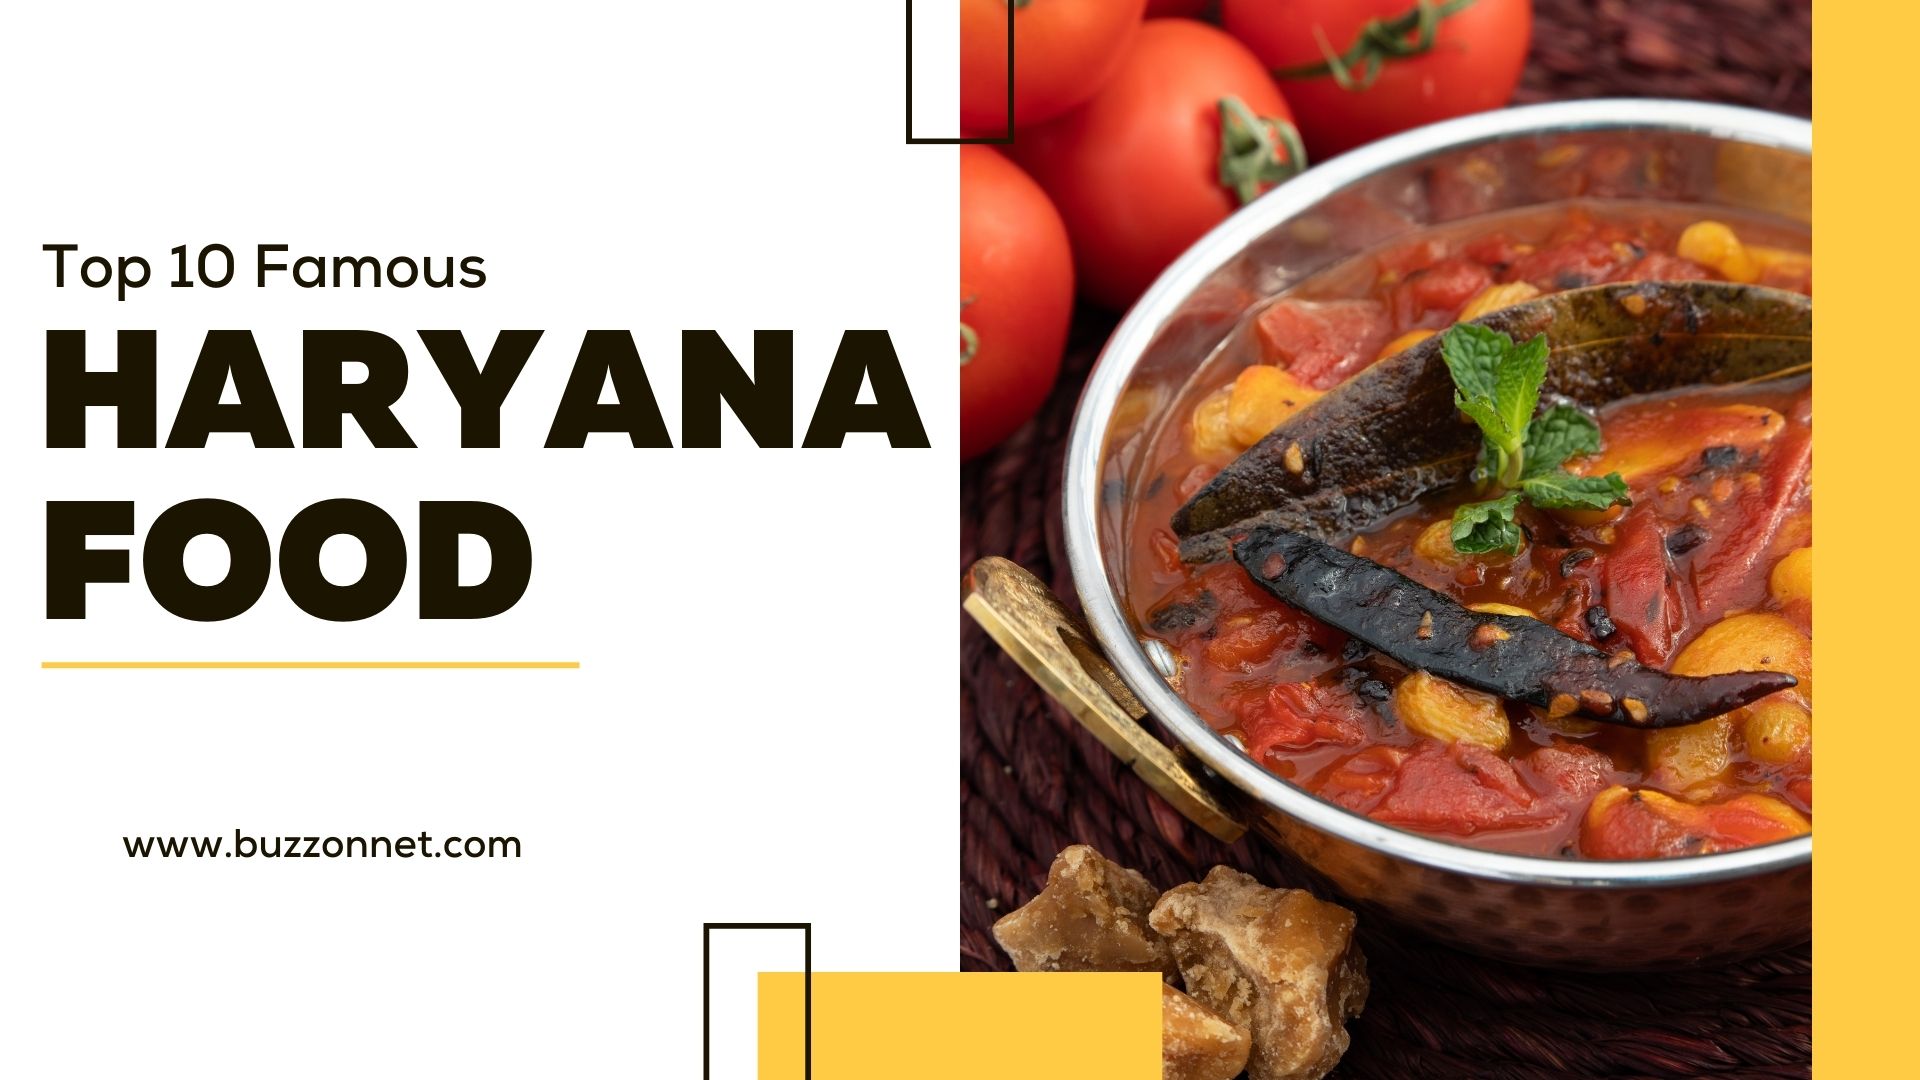 Top 10 Famous Haryana Food